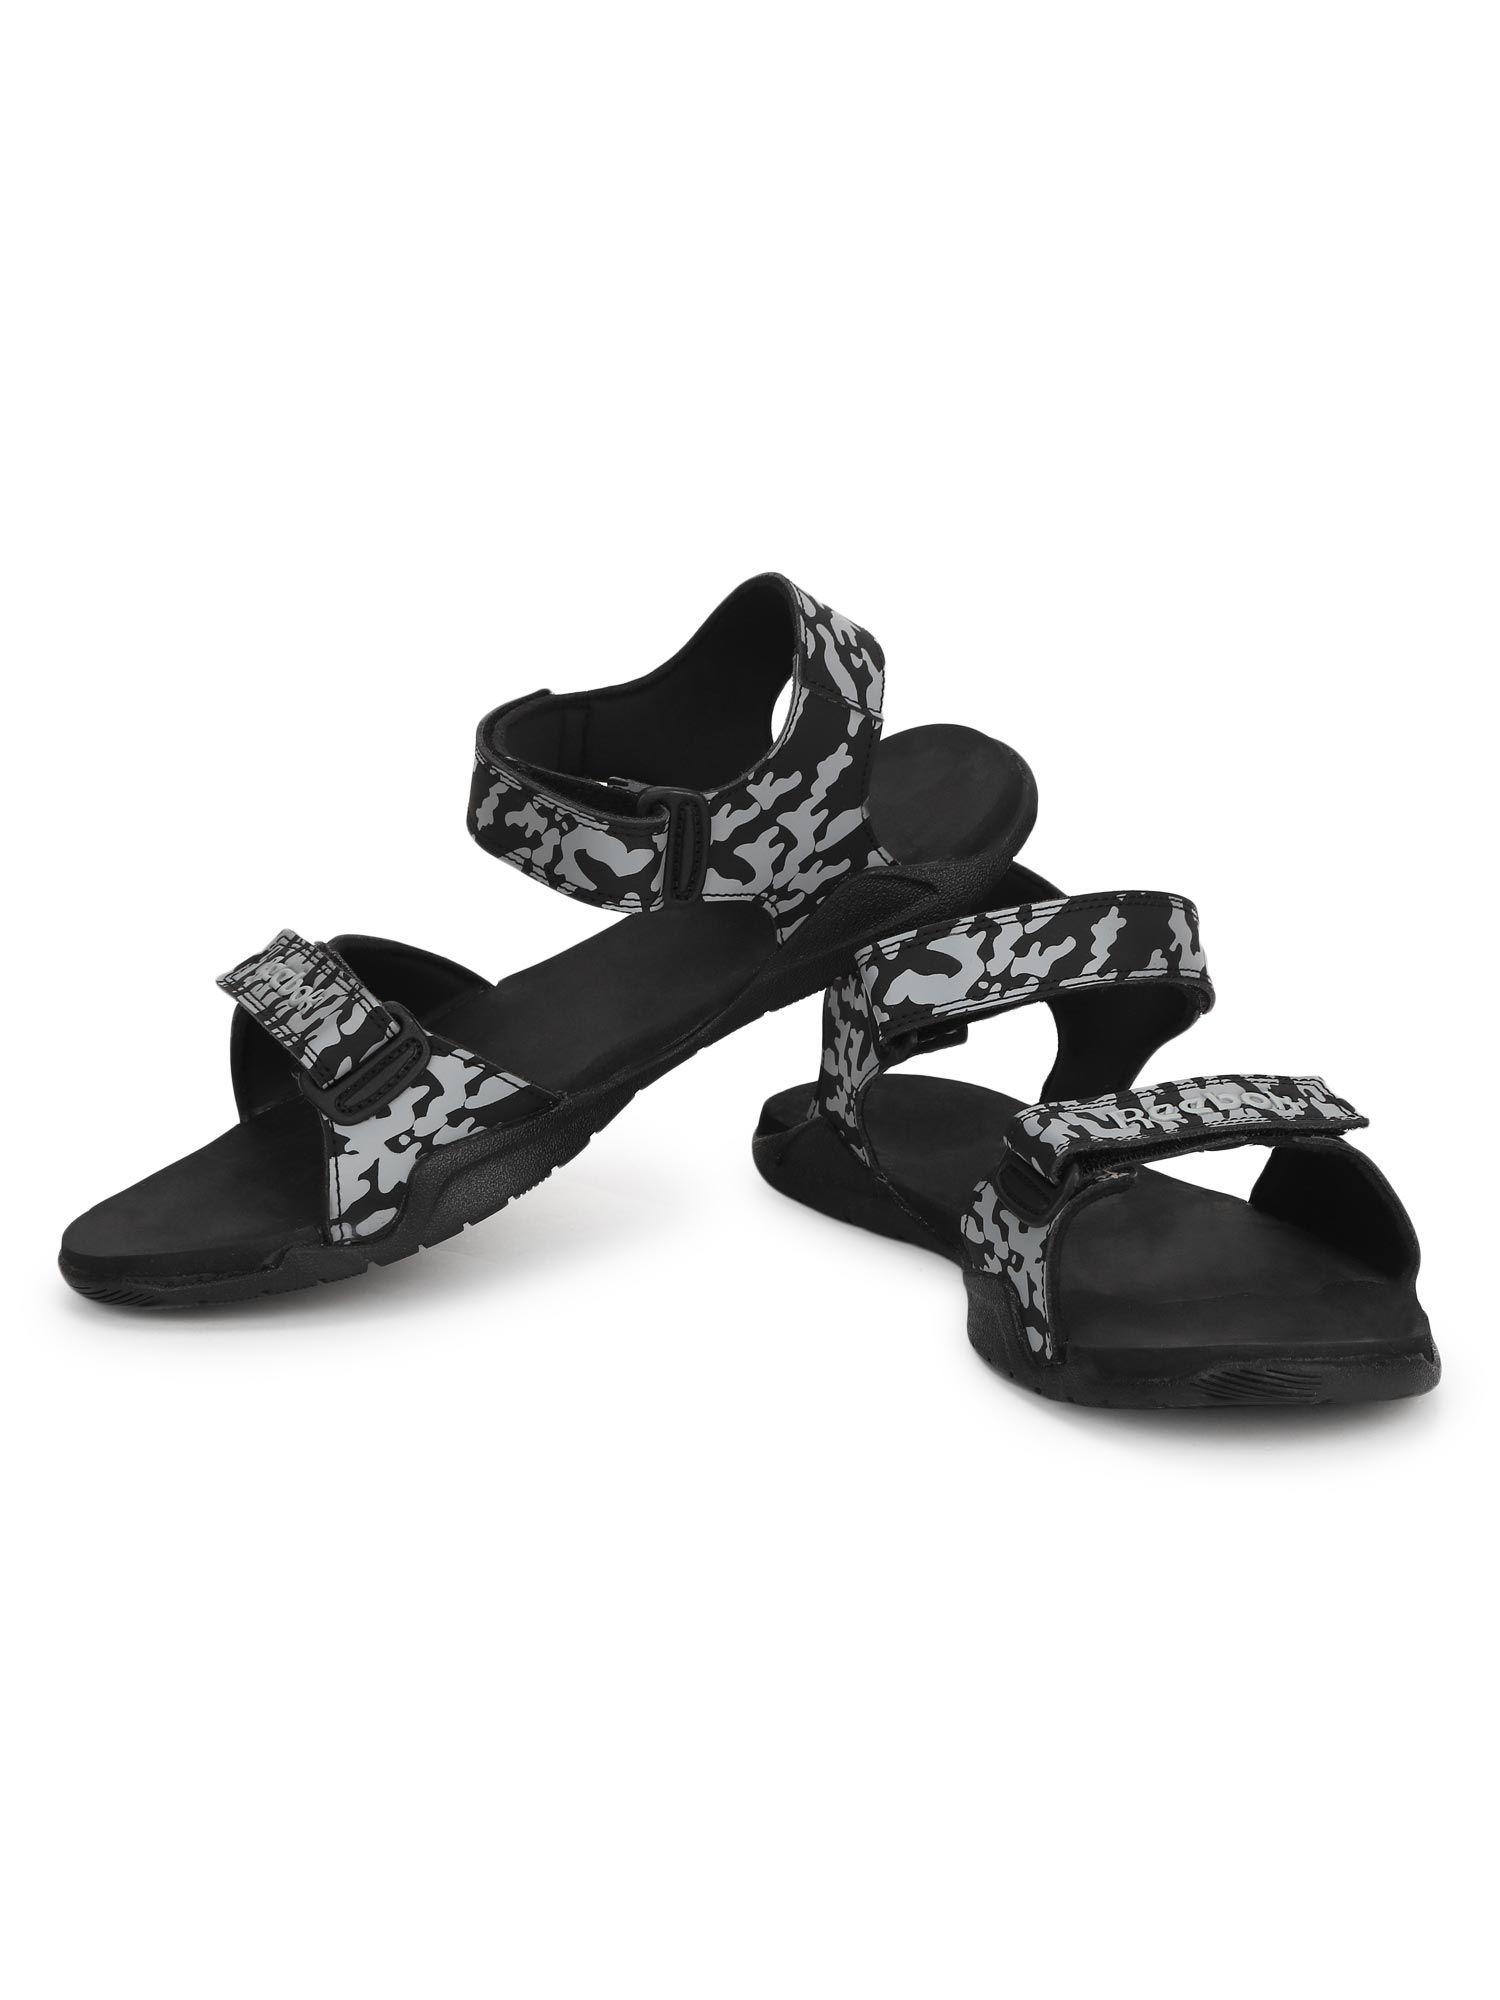 milo sandal black swim sandal